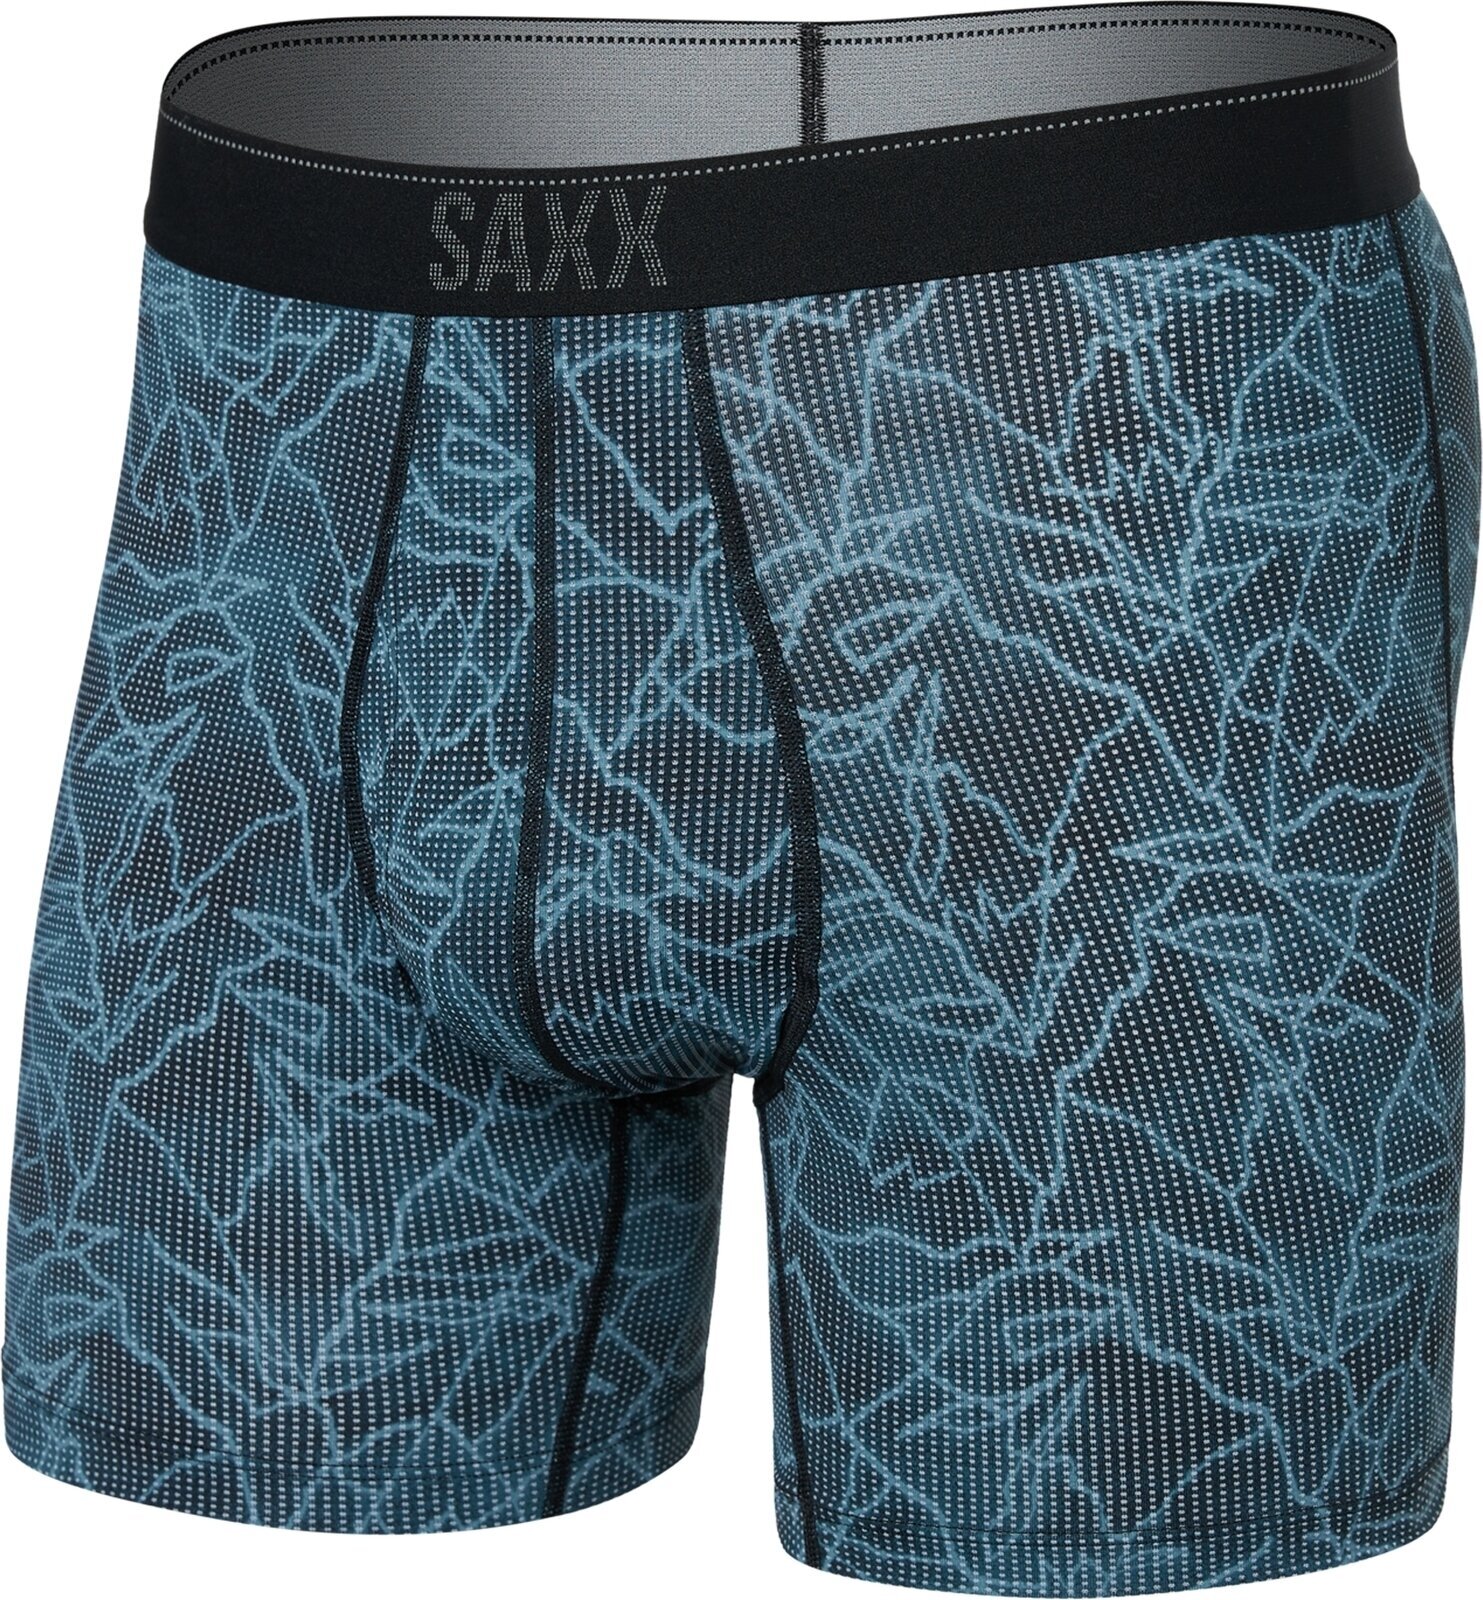 Fitness spodní prádlo SAXX Quest Boxer Brief Mountain/Black S Fitness spodní prádlo